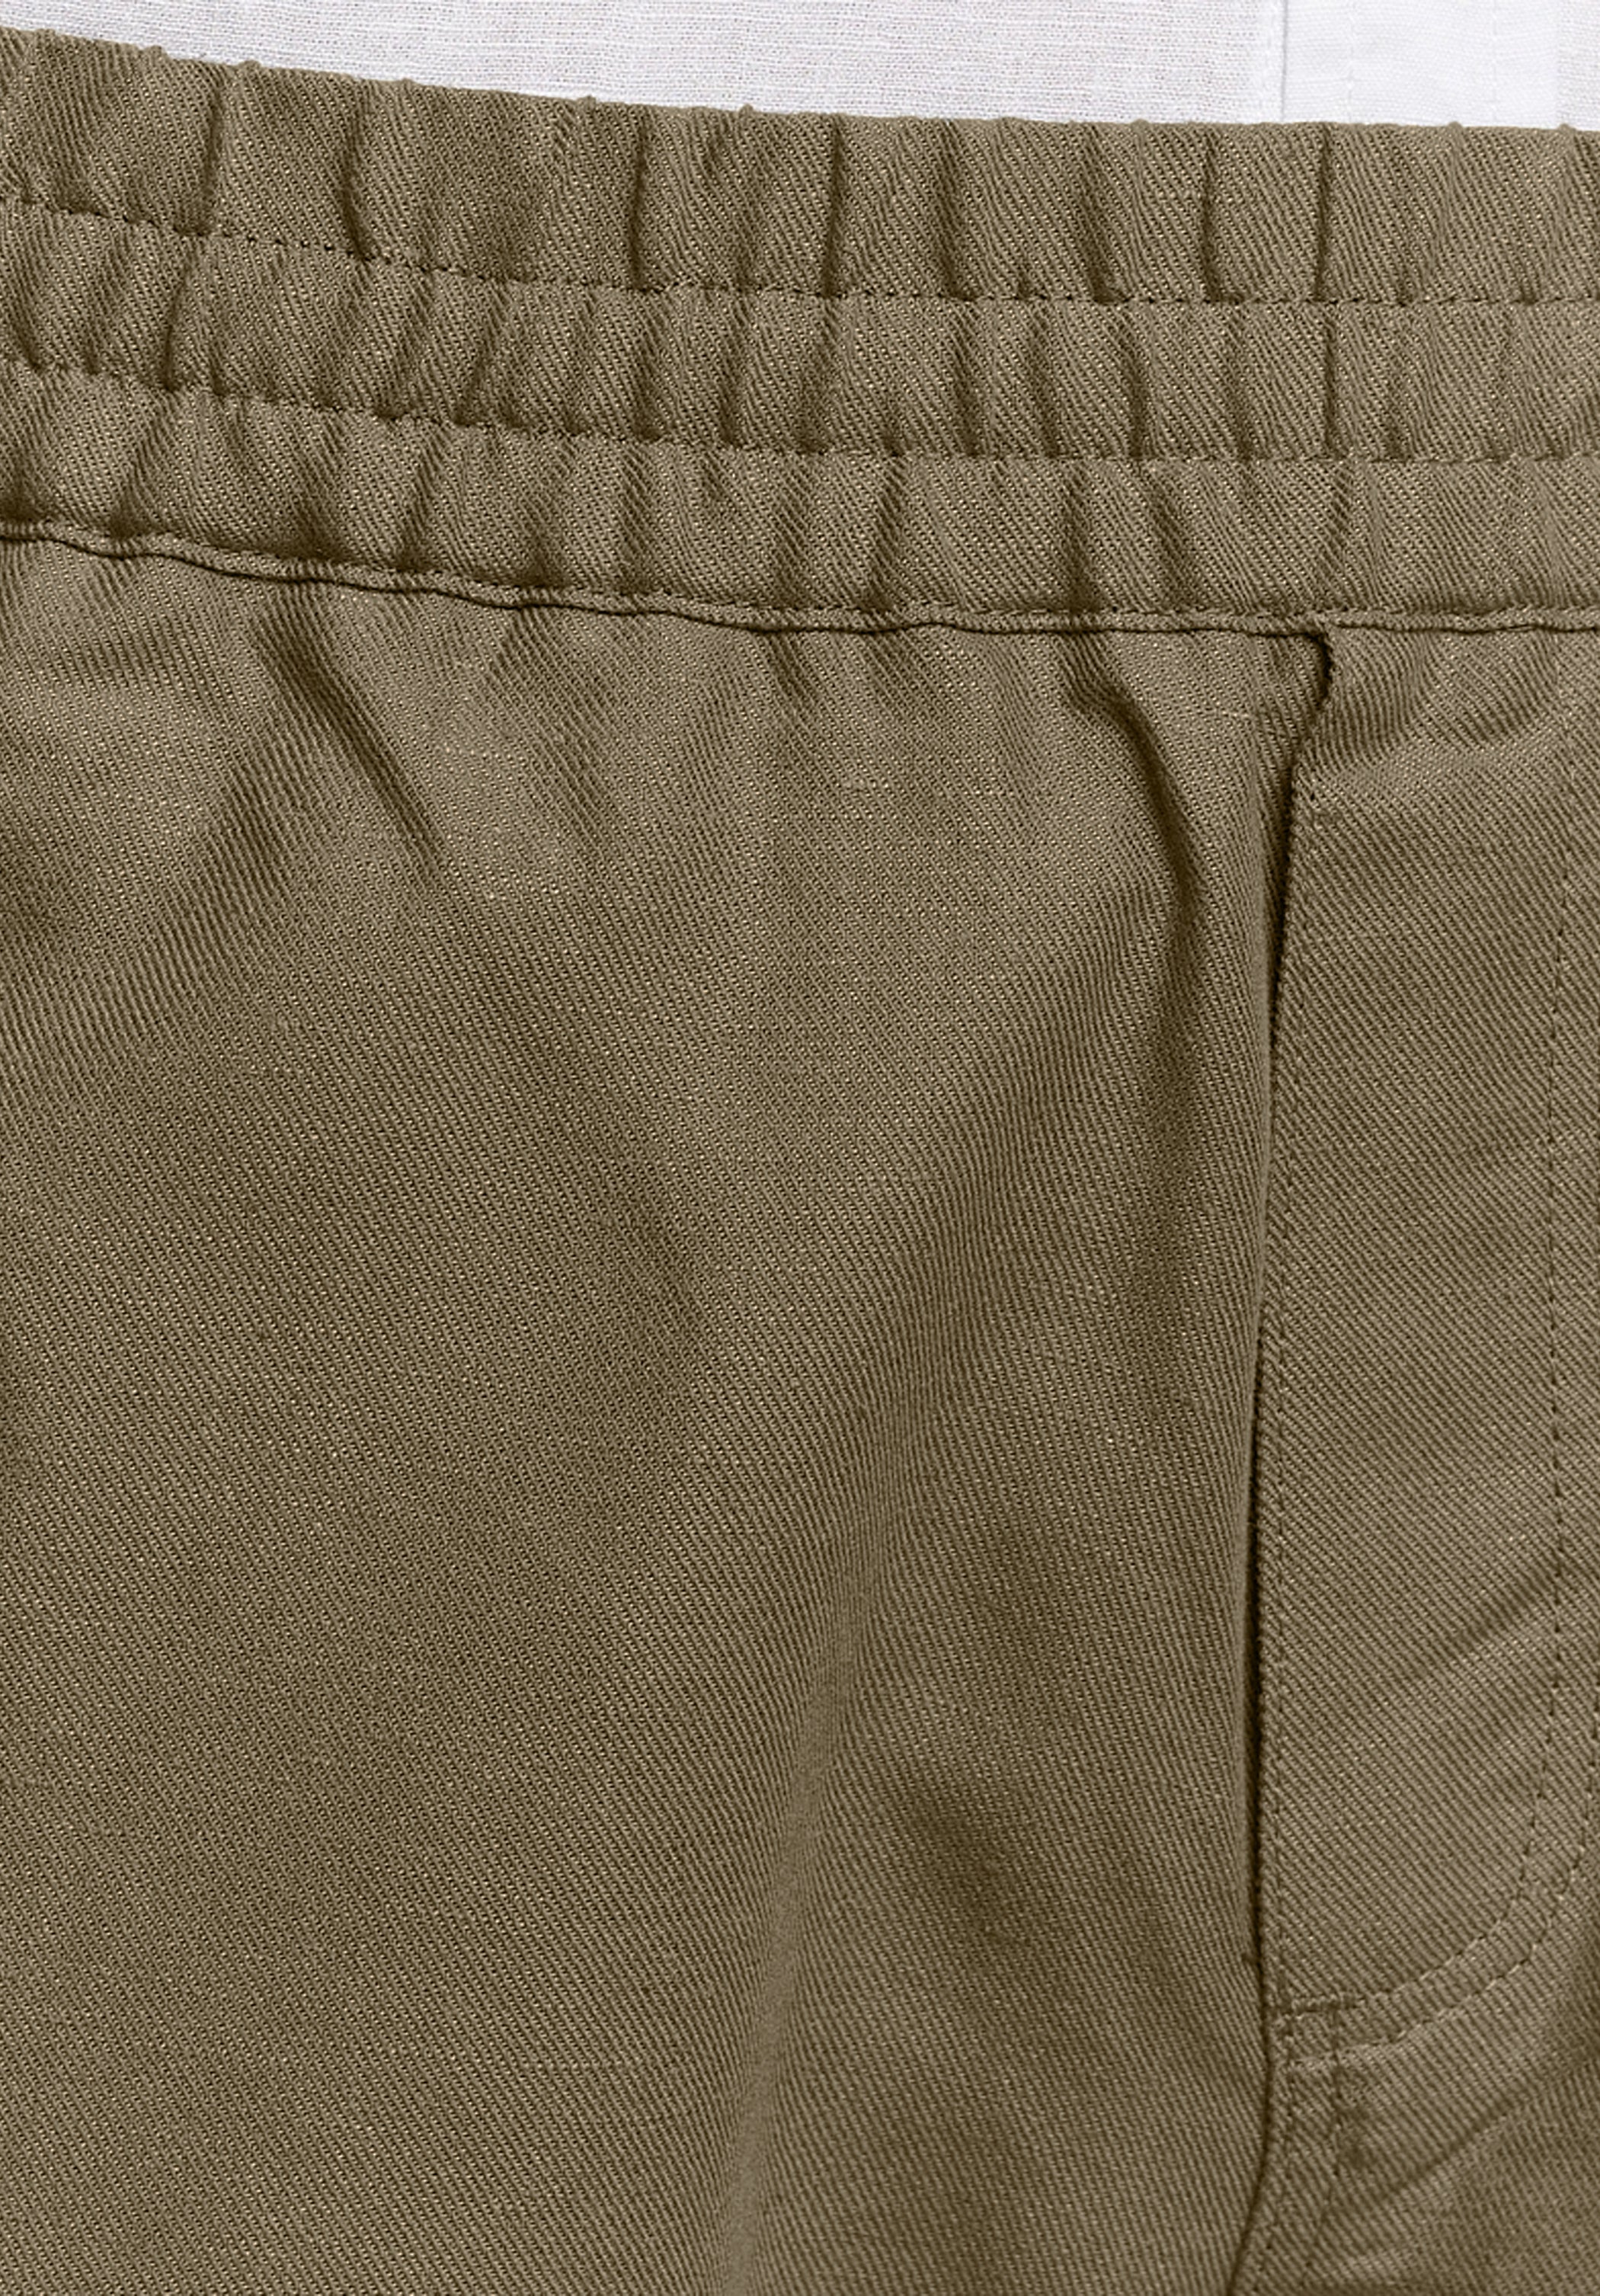 Khaki Cotton Linen Shorts